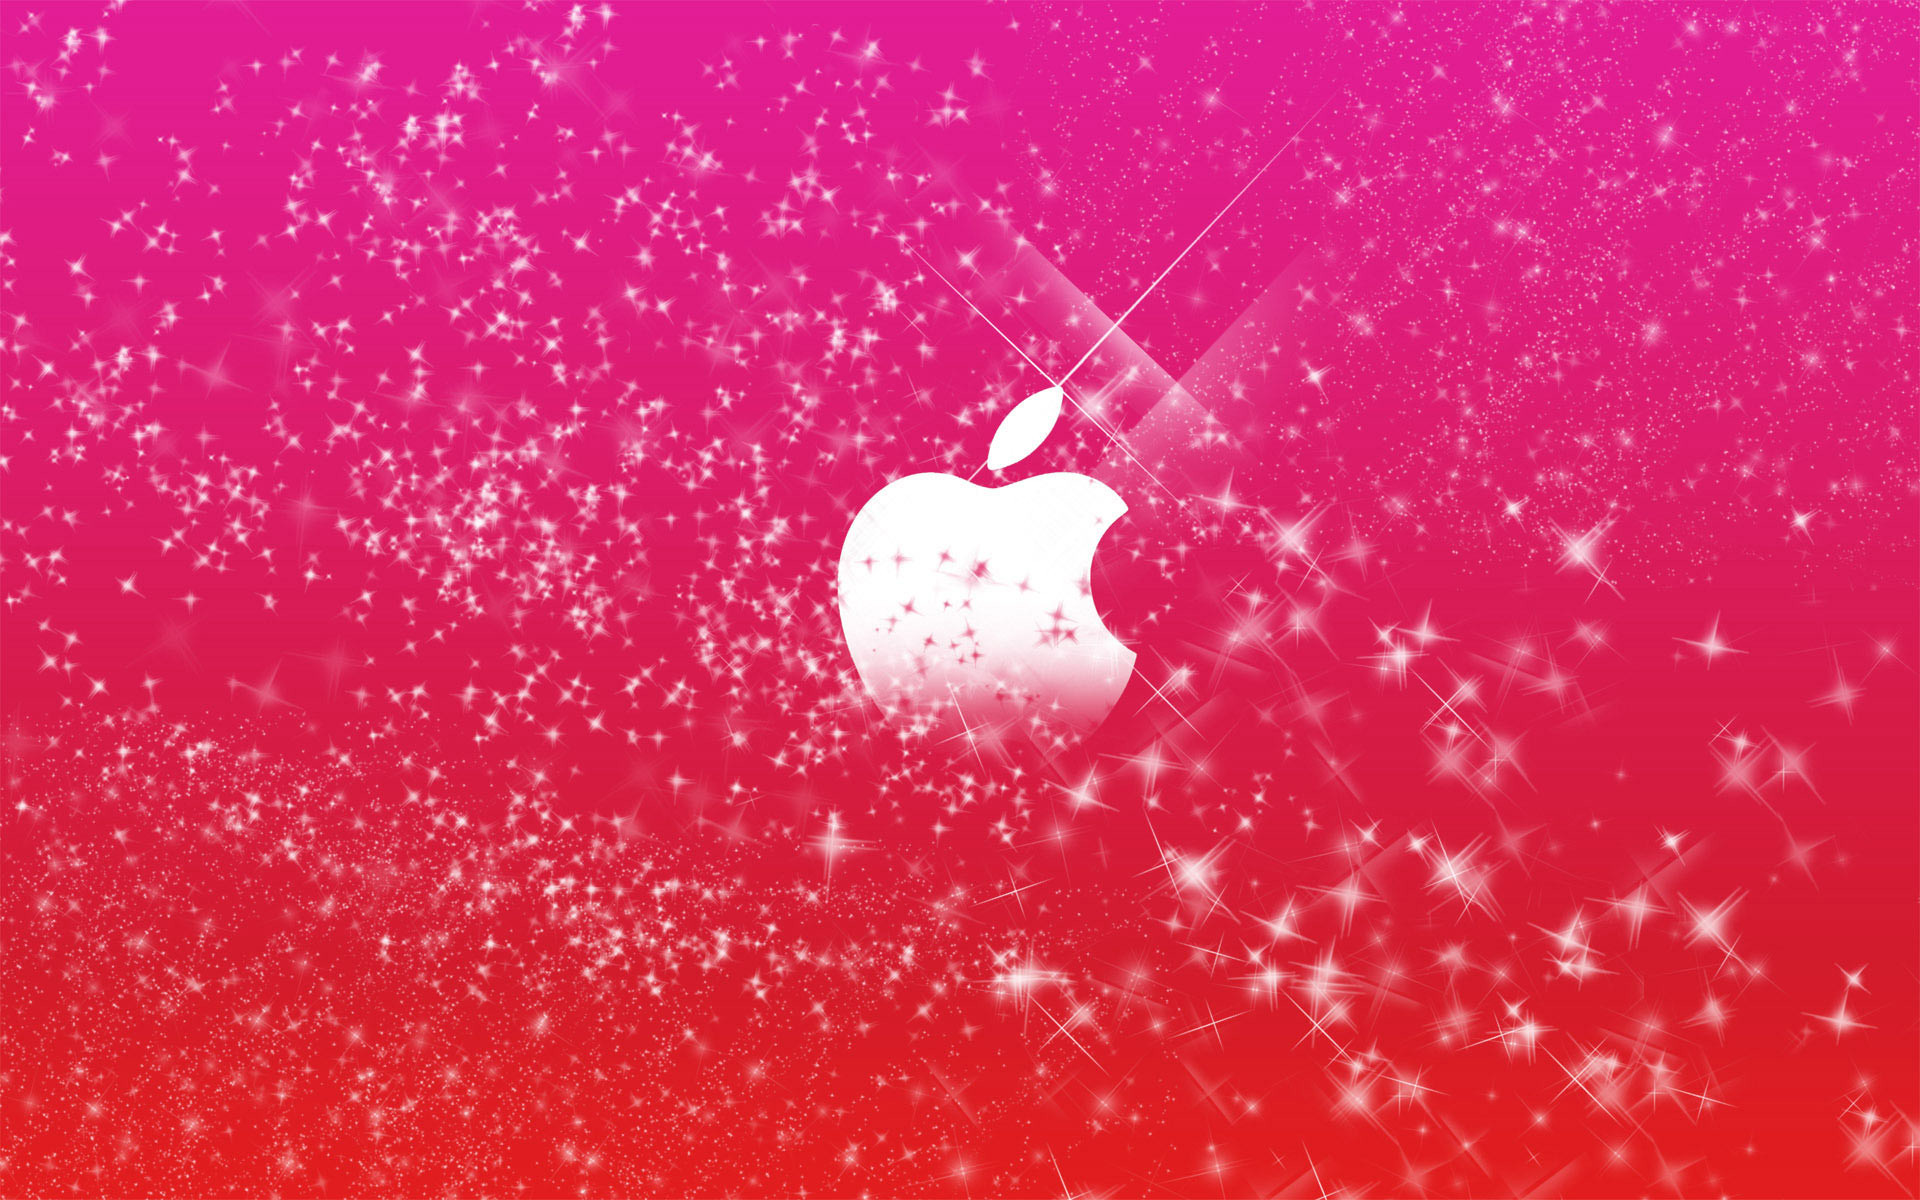 pink desktop backgrounds | pink desktop backgrounds free | Desktop .